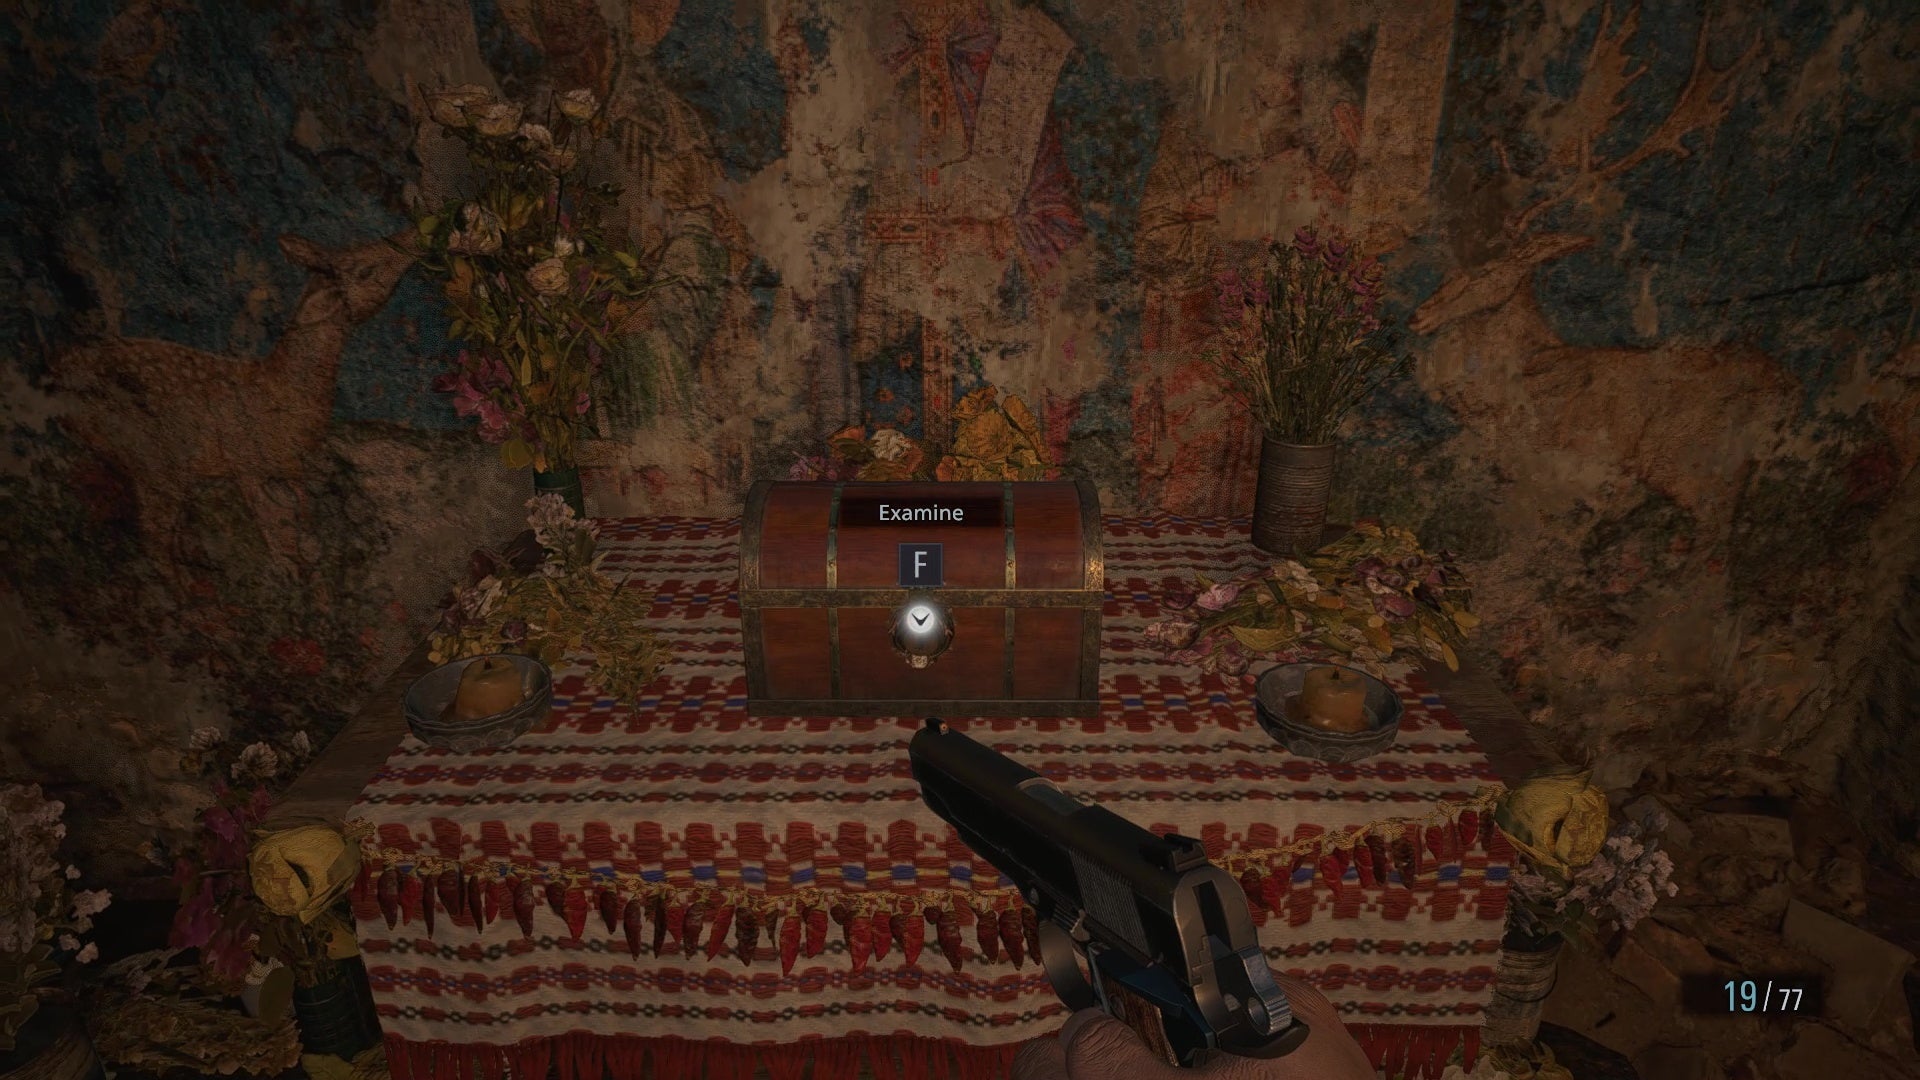 An image of Luiza's lockbox in Resident Evil Village.